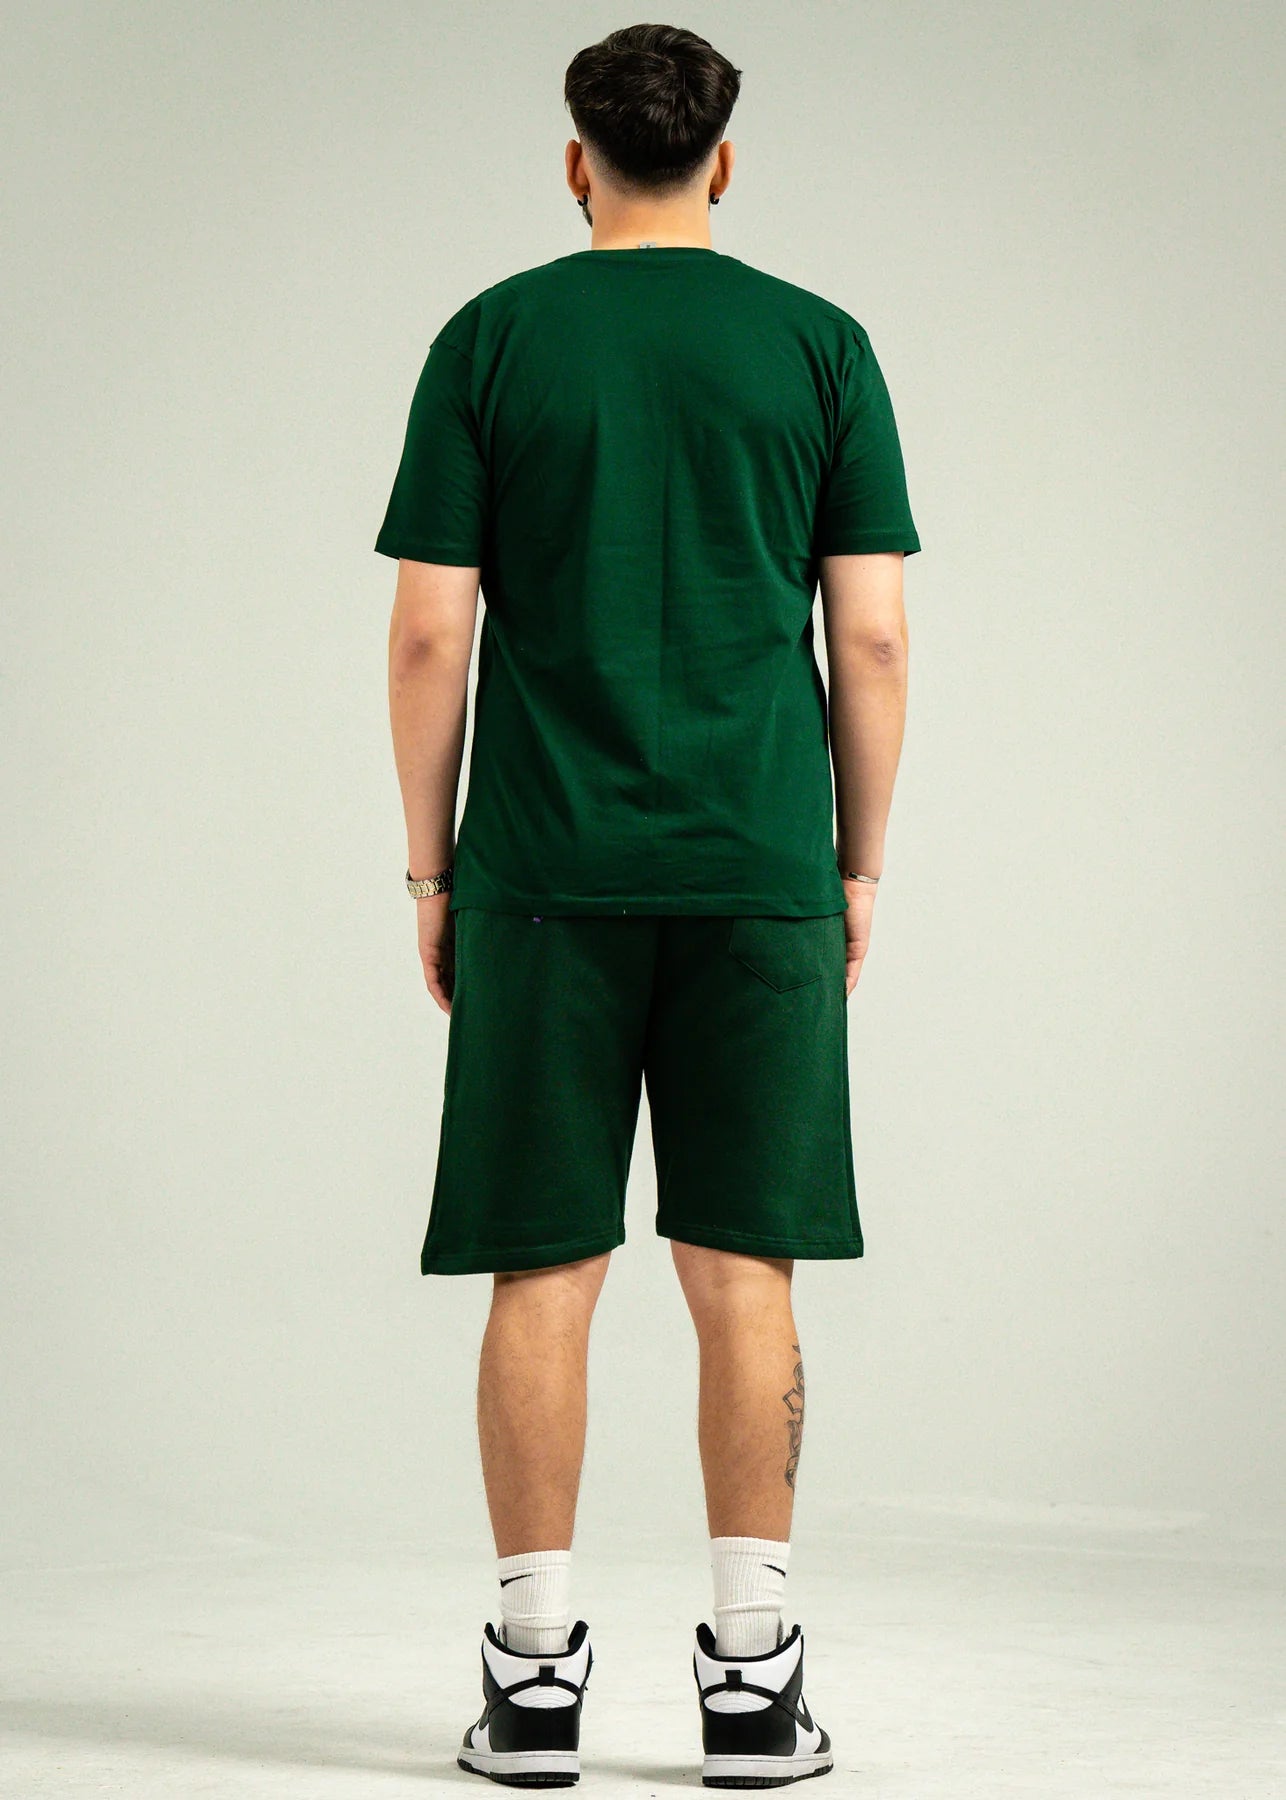 Hunter Green T-Shirt and Short Set